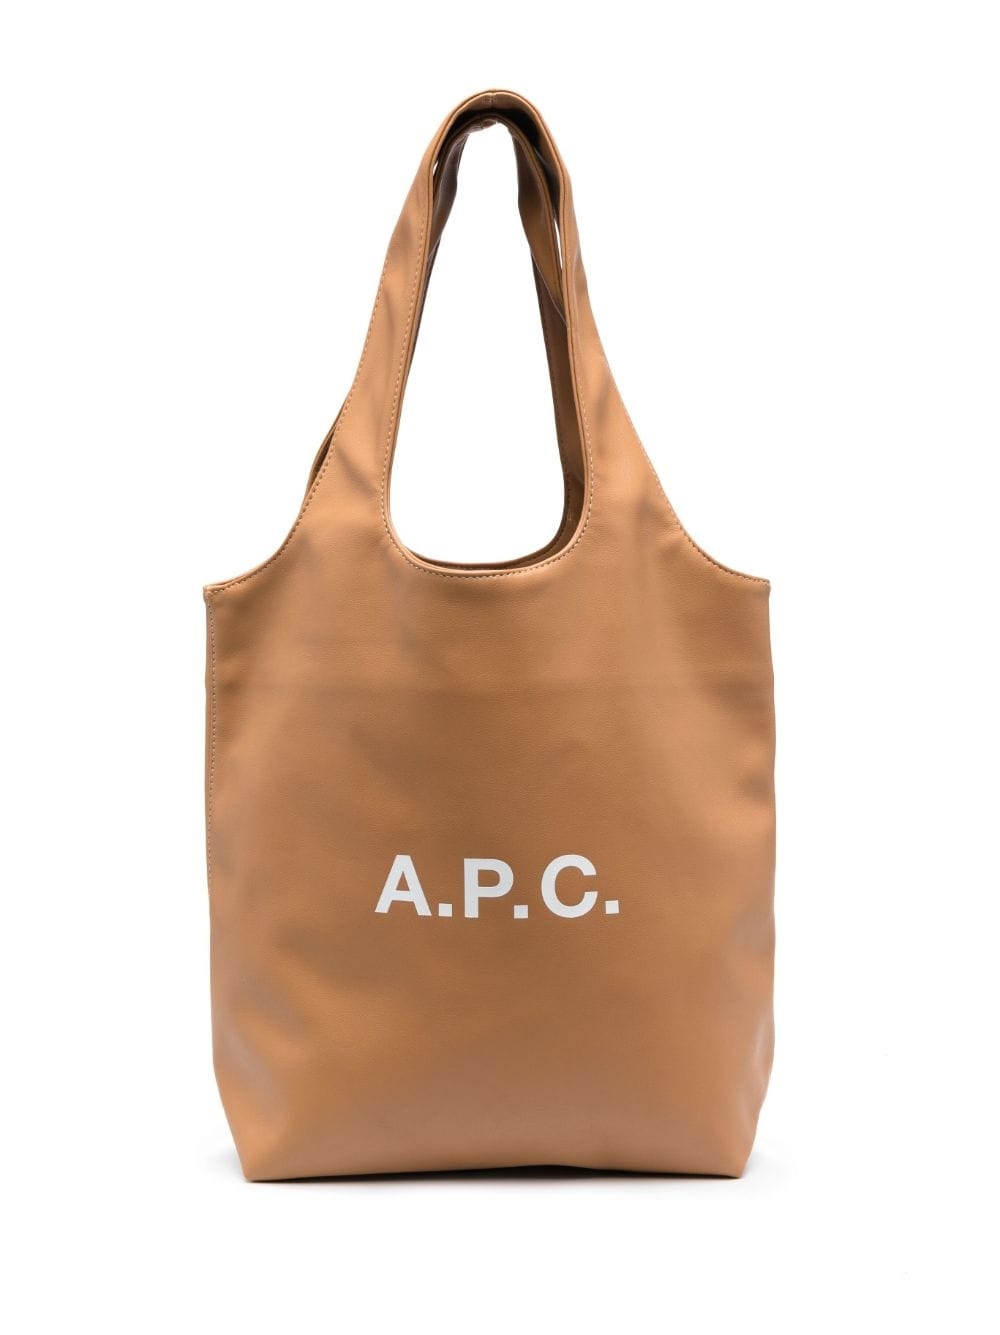 A.P.C. Tote Bags